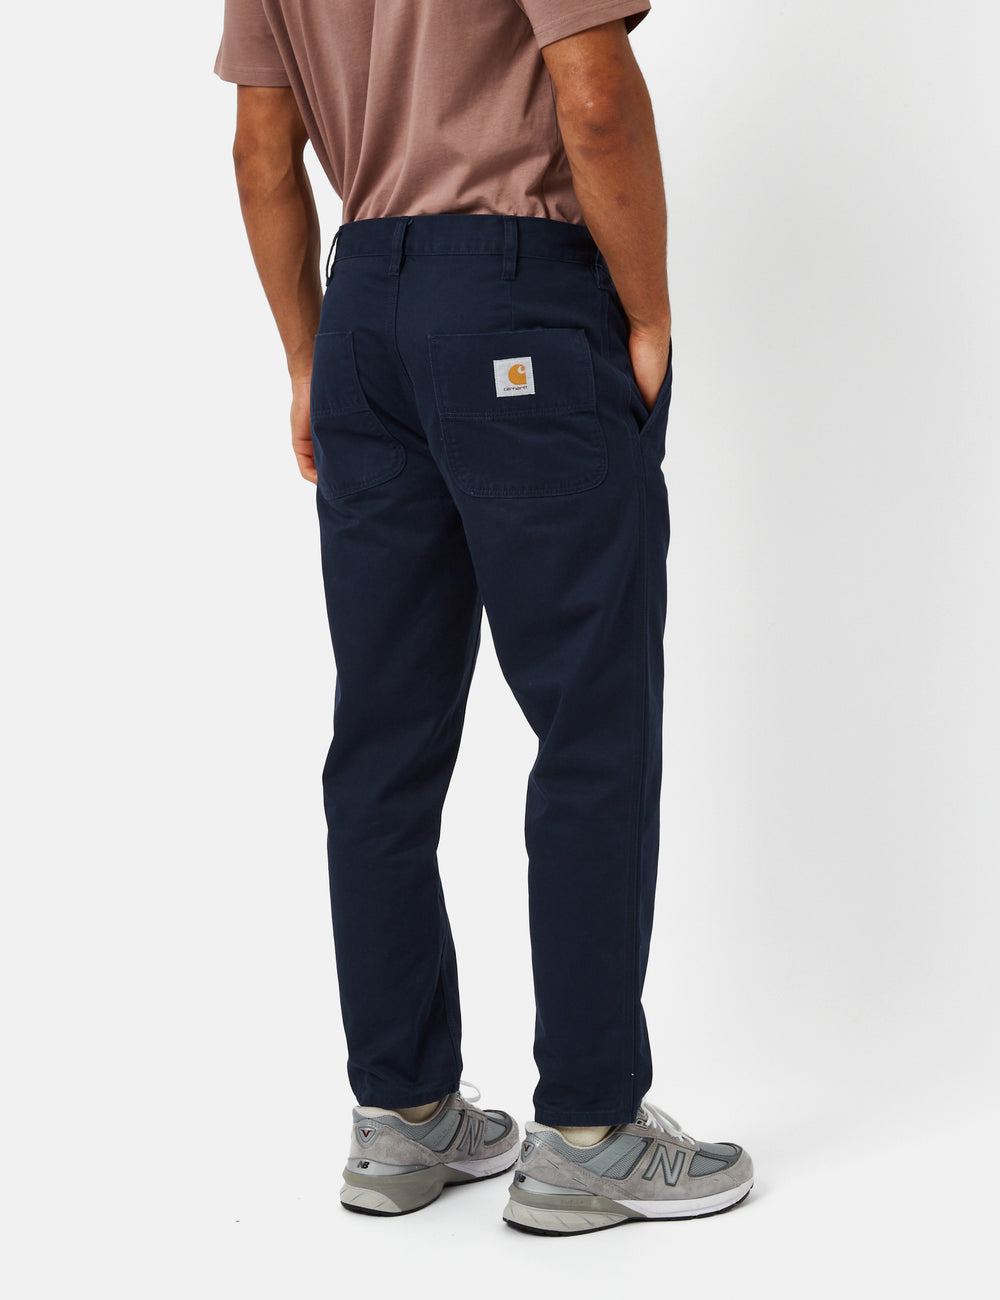 Men's trousers and shorts - brown - Pants - Carhartt WIP - Shooos.co.uk